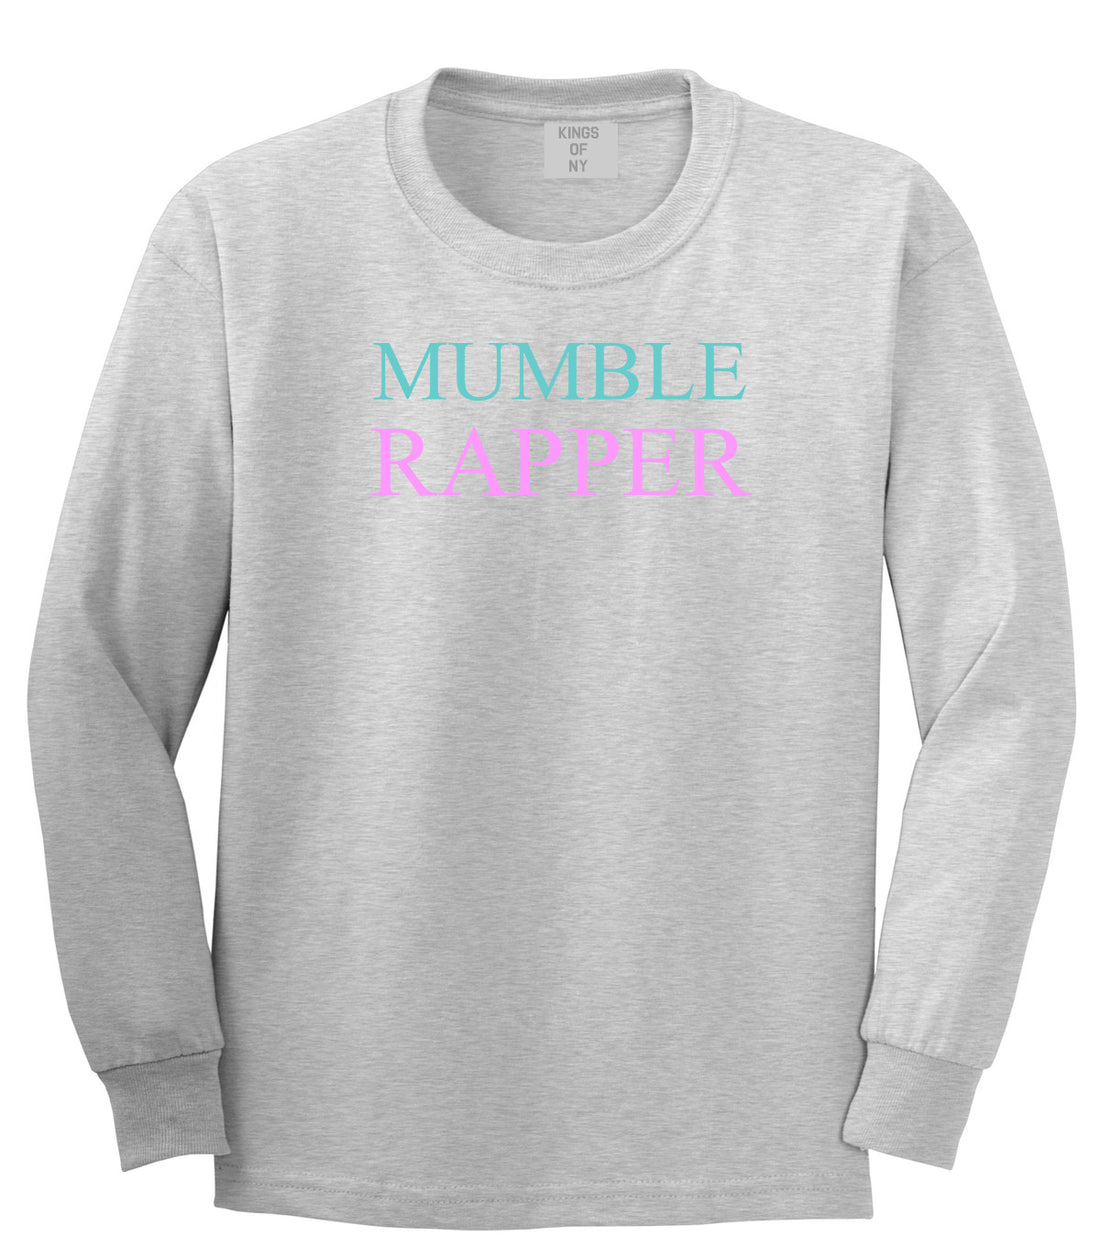 Mumble Rapper Long Sleeve T-Shirt in Grey